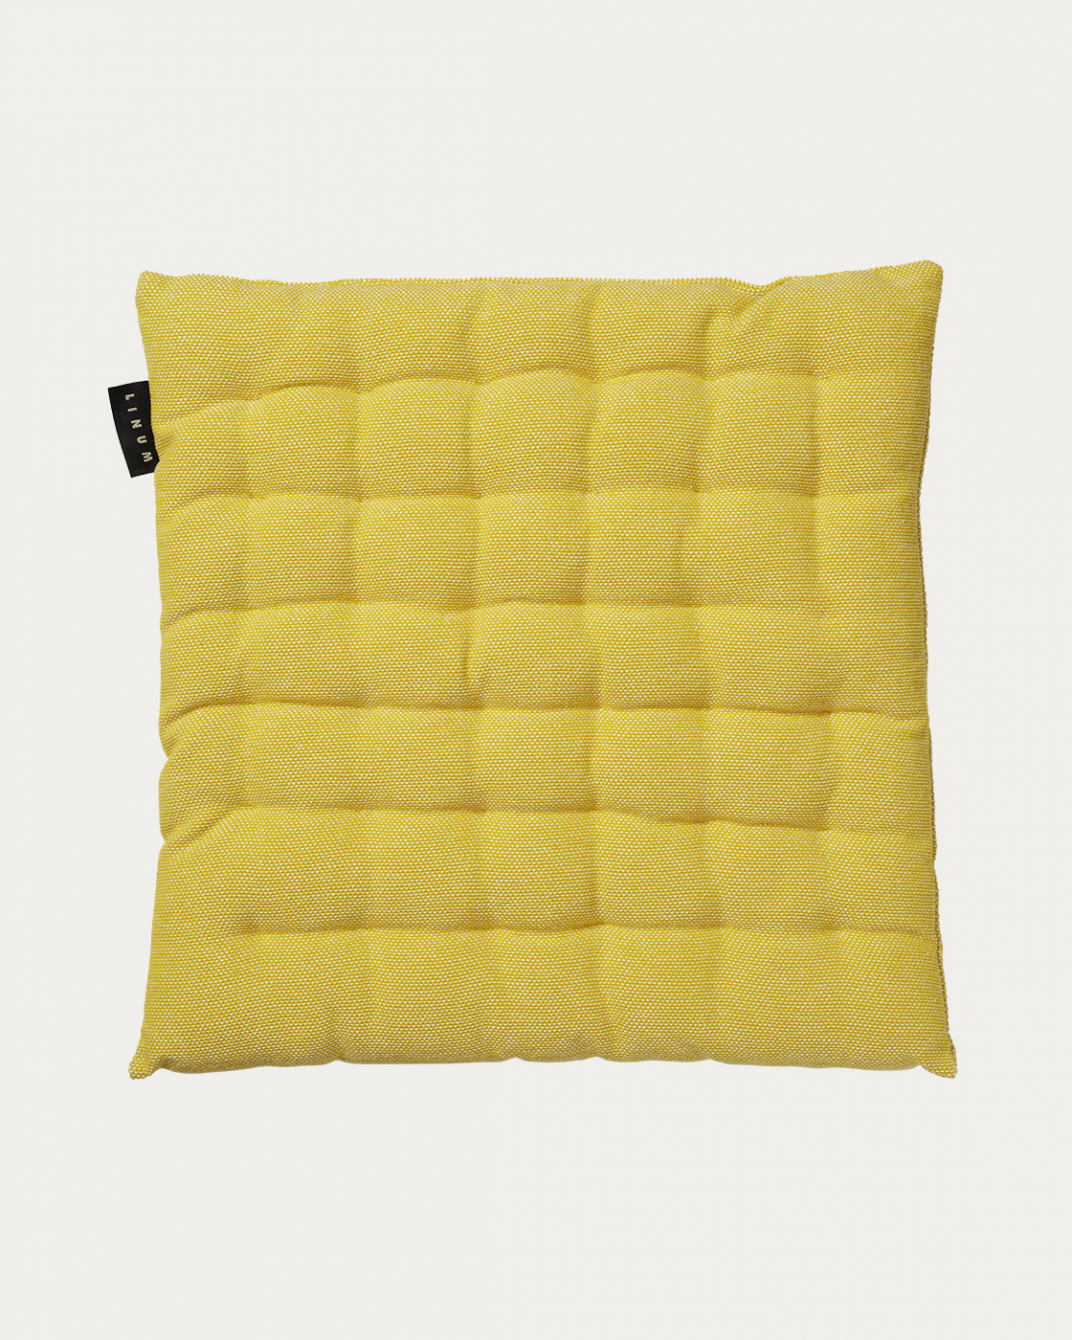 PEPPER Seat cushion 40x40 cm Mustard yellow